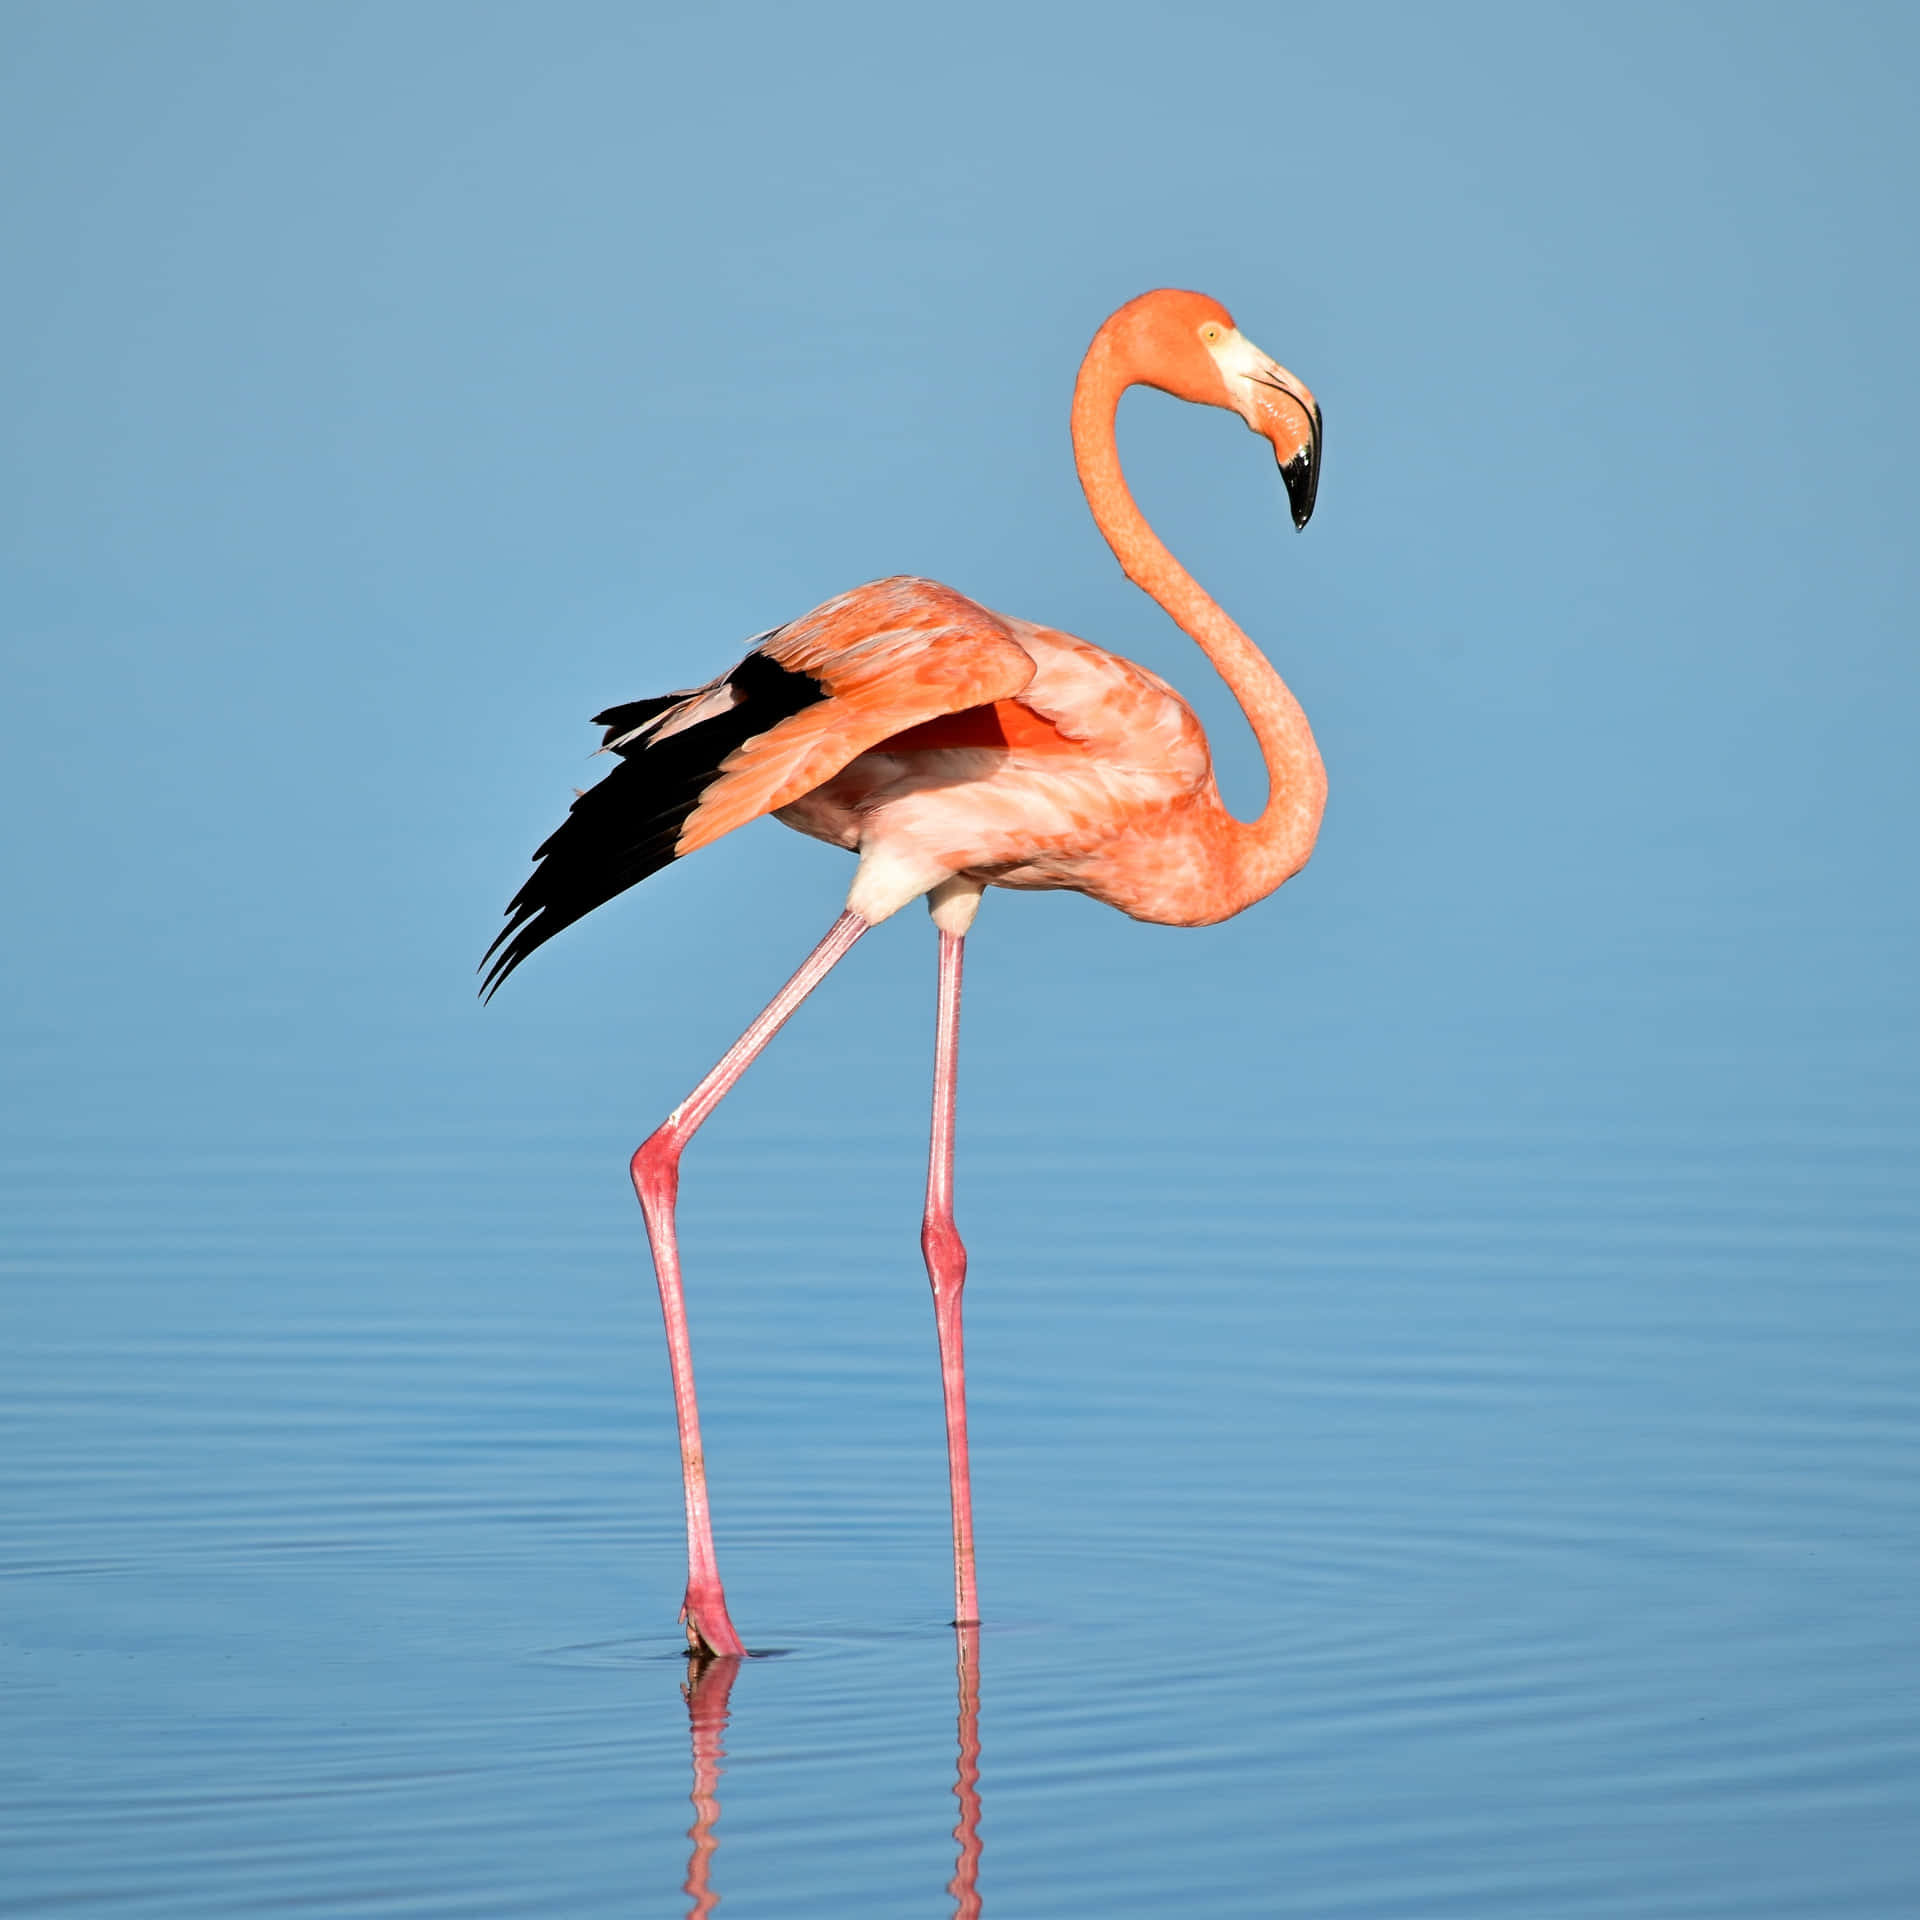 Caption: Vibrant Gathering Of Flamingos